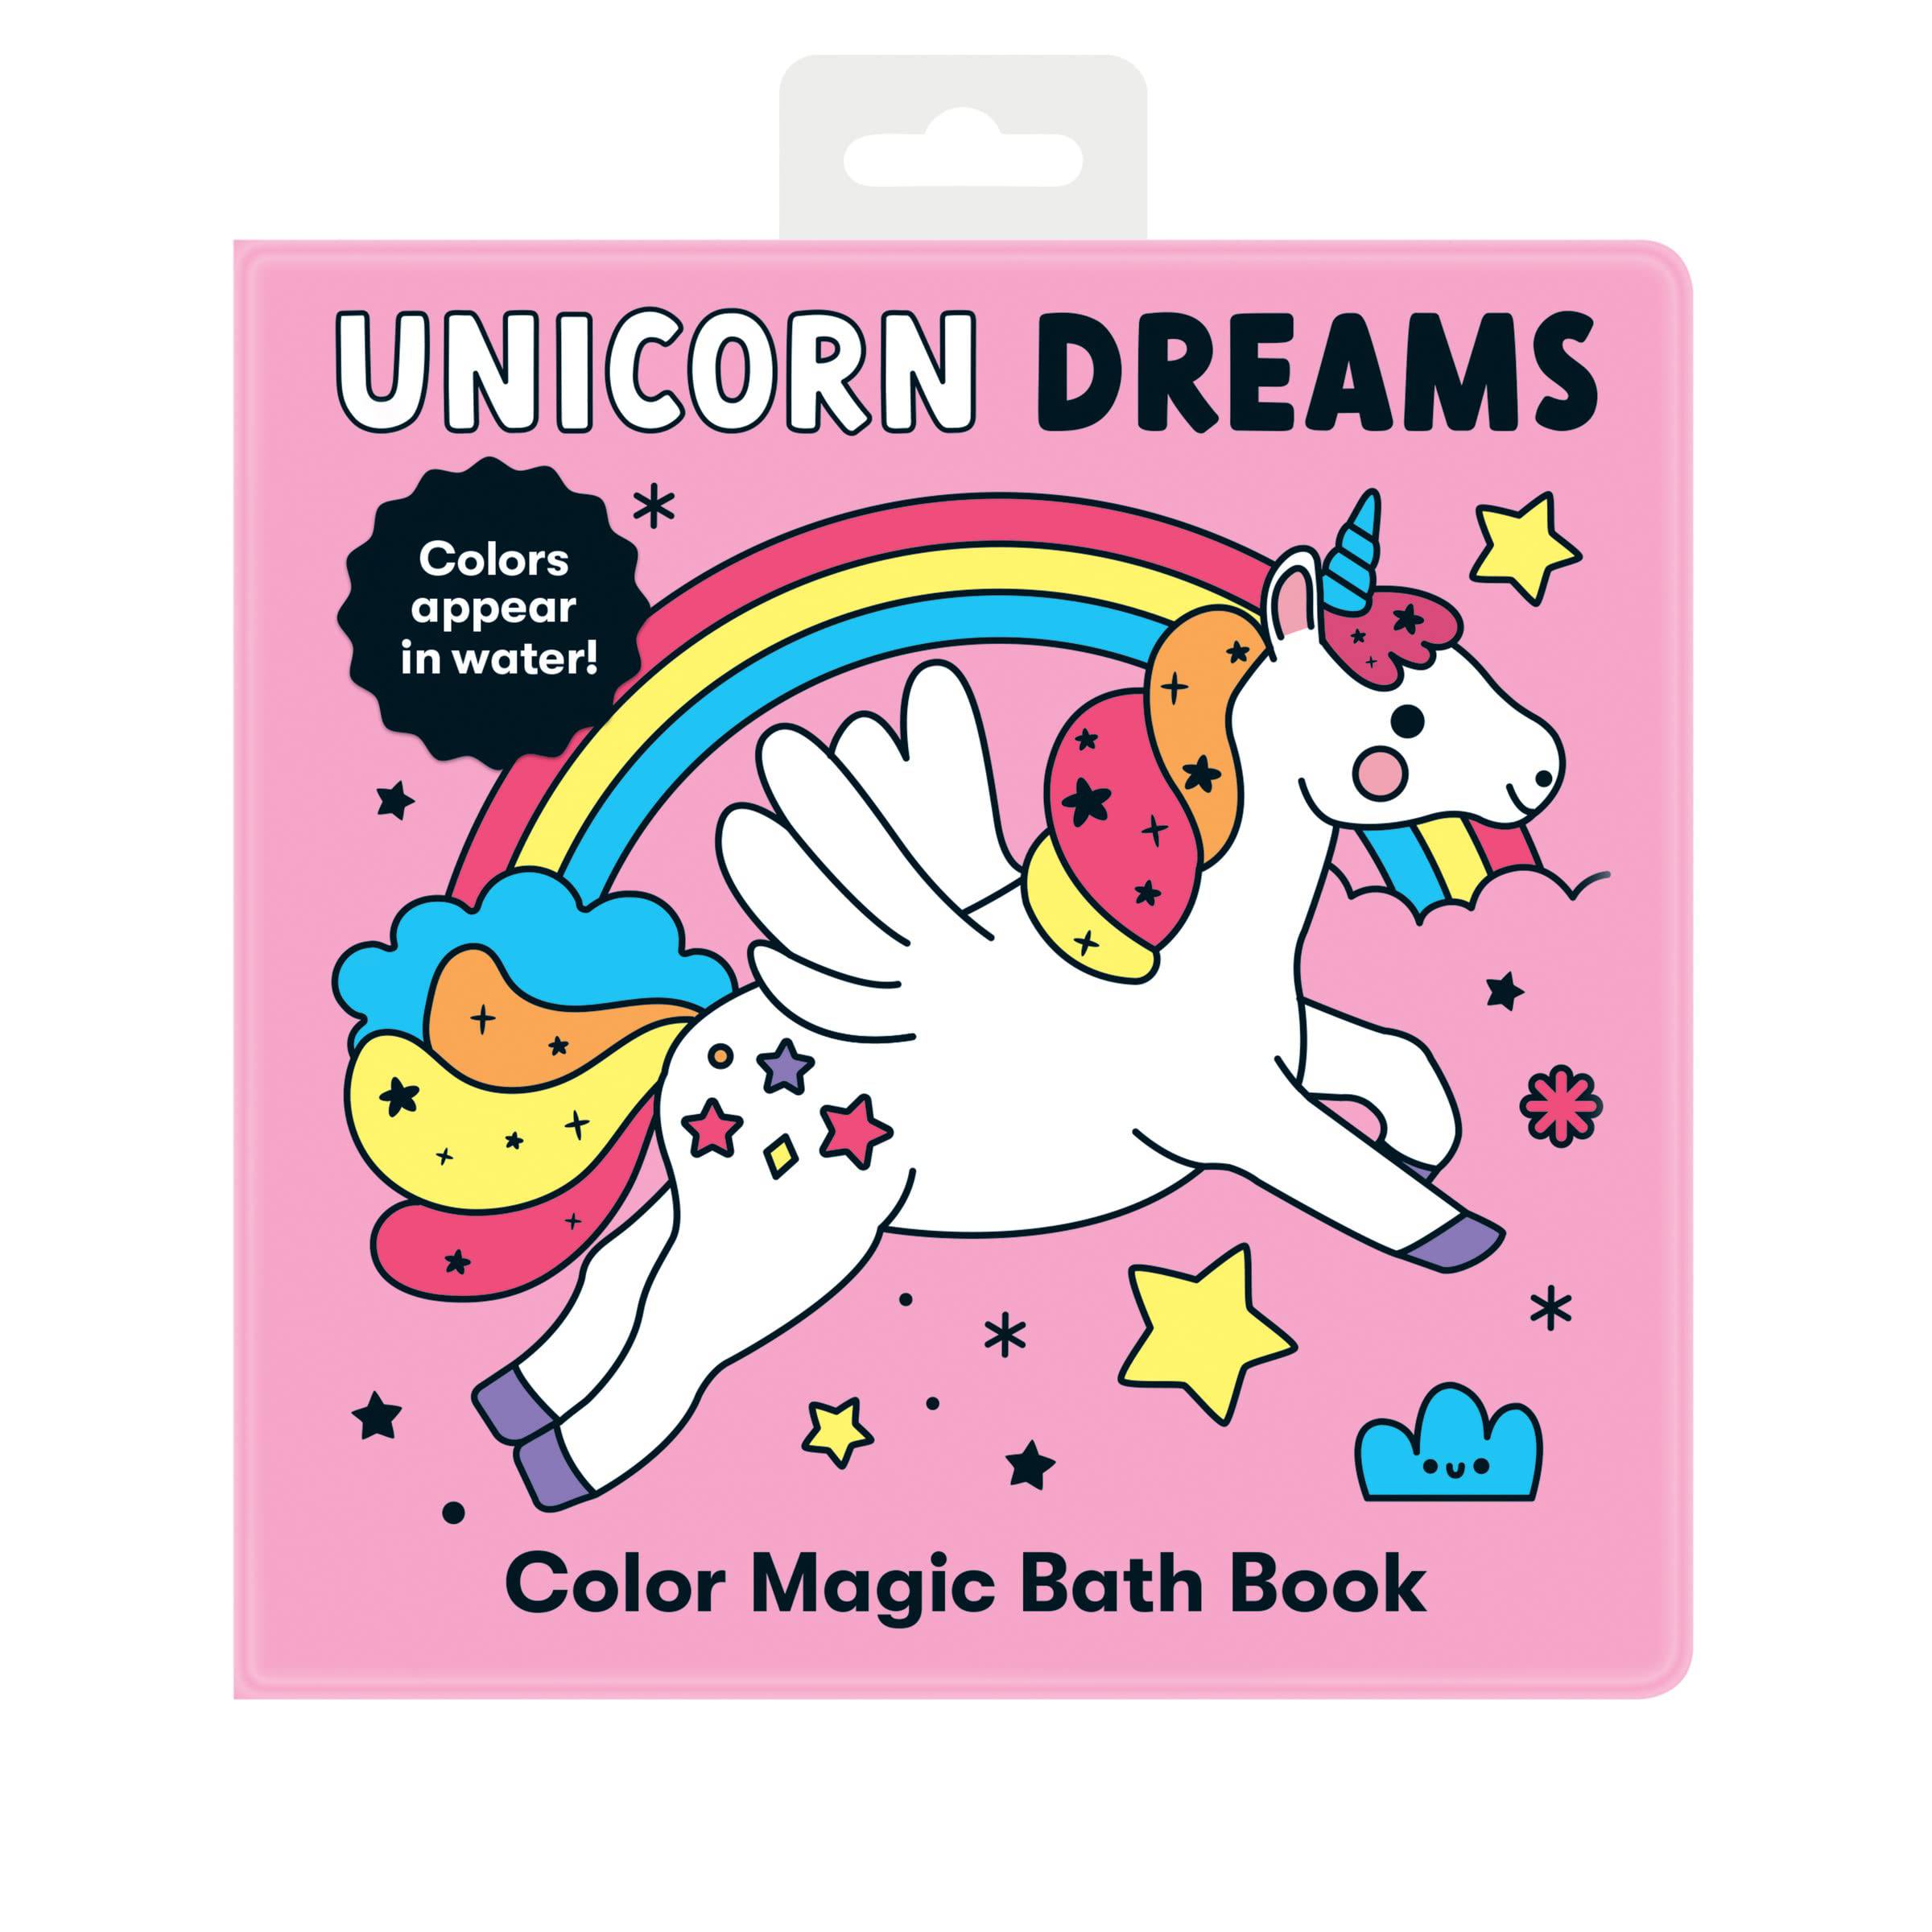 Unicorn Dreams Color Magic Bath Book - Twinkle Twinkle Little One